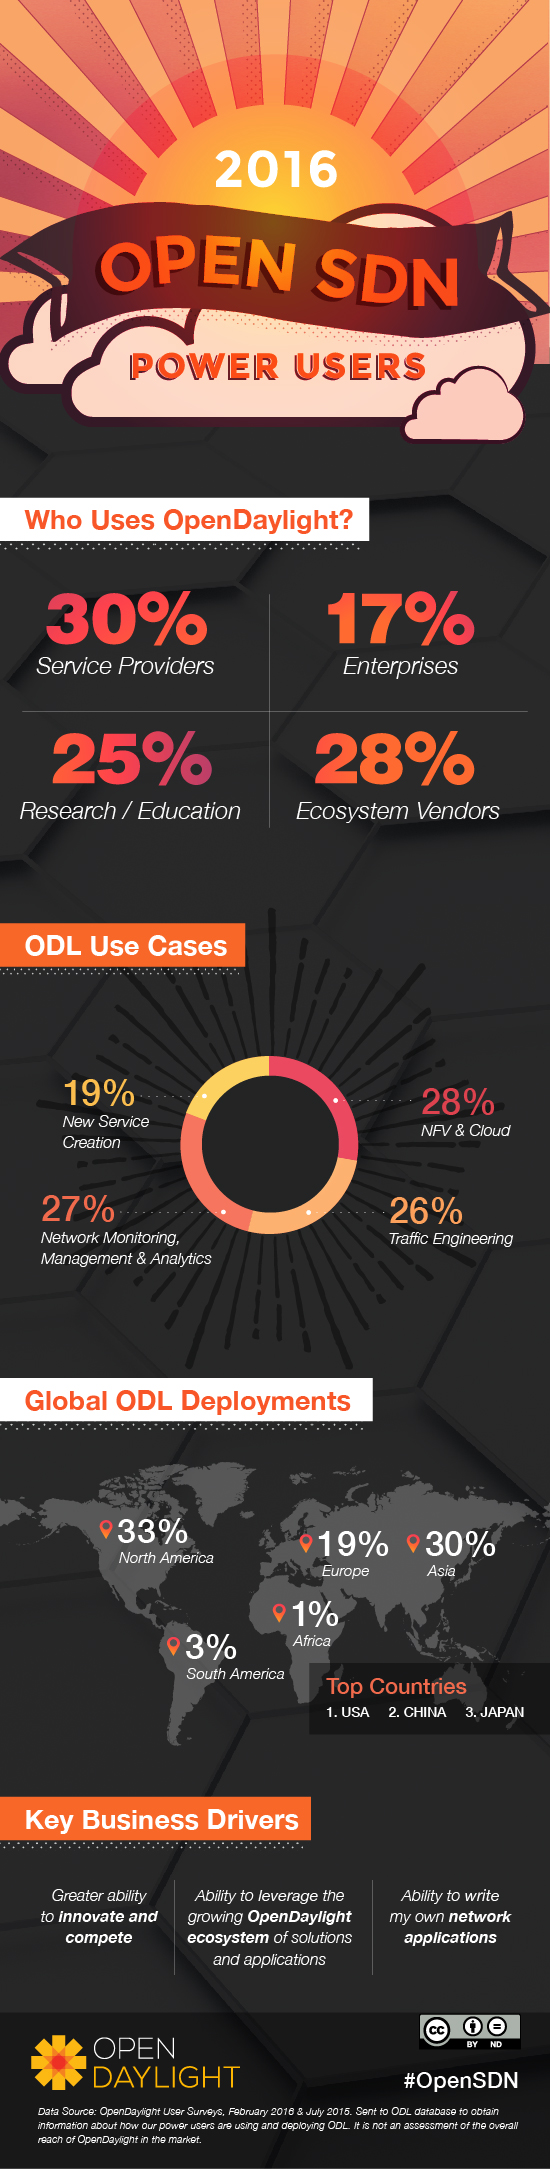 OpenDaylight Infographic 2016 user survey